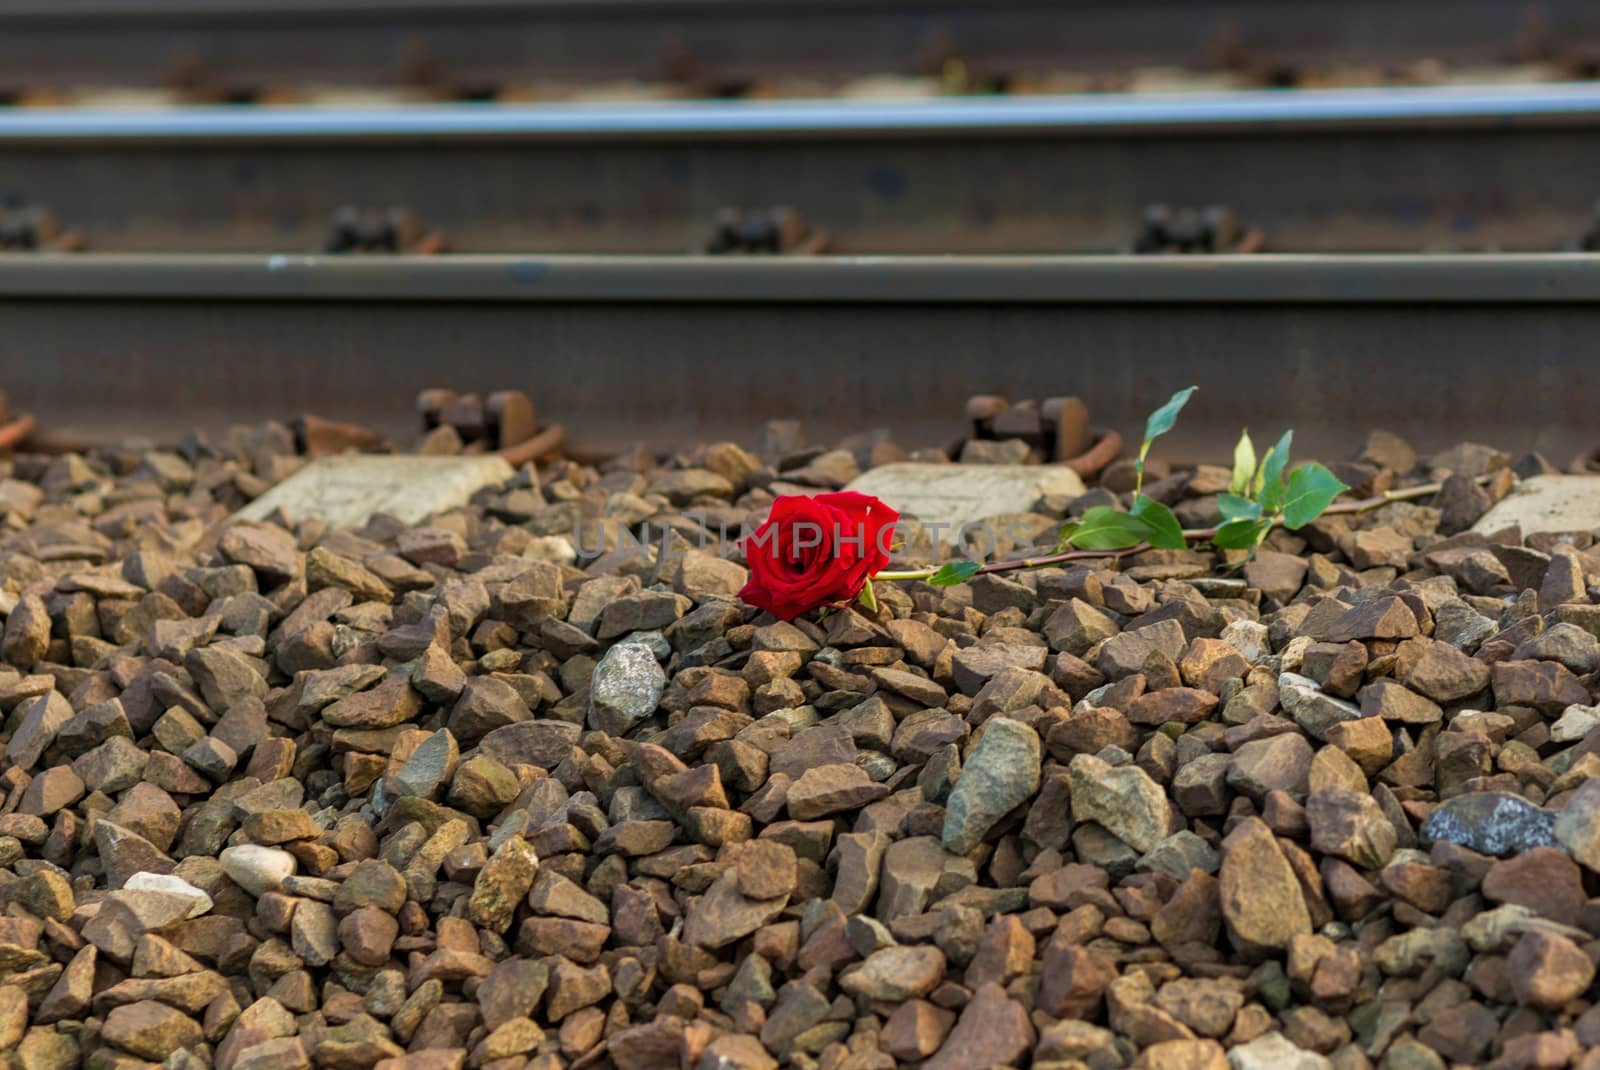 Red rose lies next to the rails on the train tracks. by galinasharapova